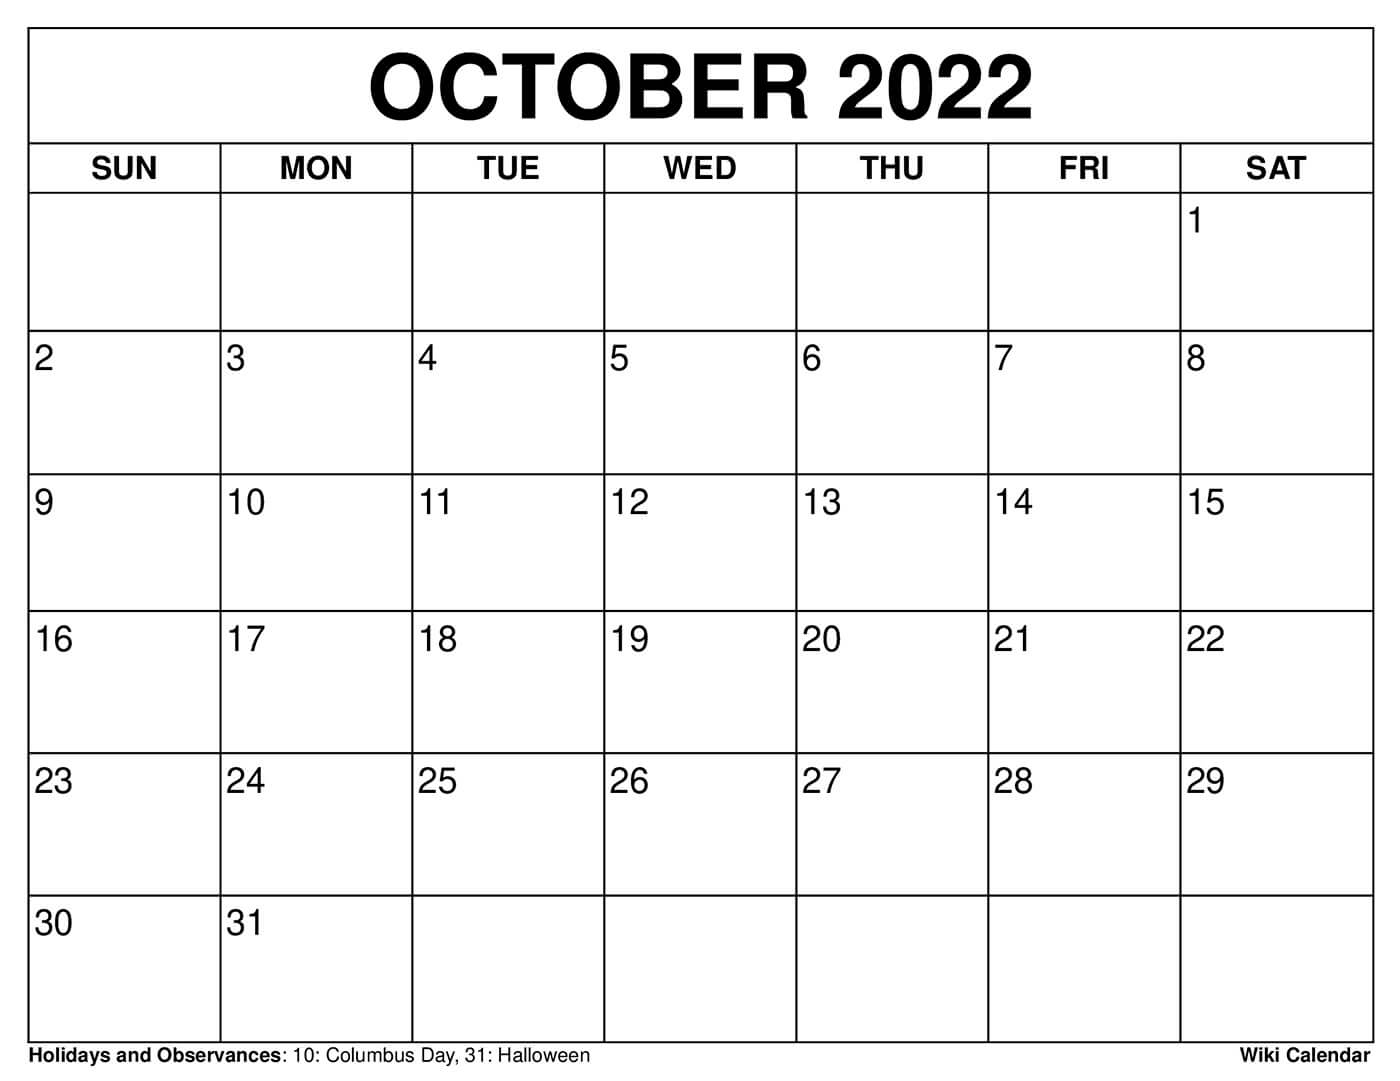 October 2022 Free Printable Calendar Free Printable October 2022 Calendars - Wiki Calendar